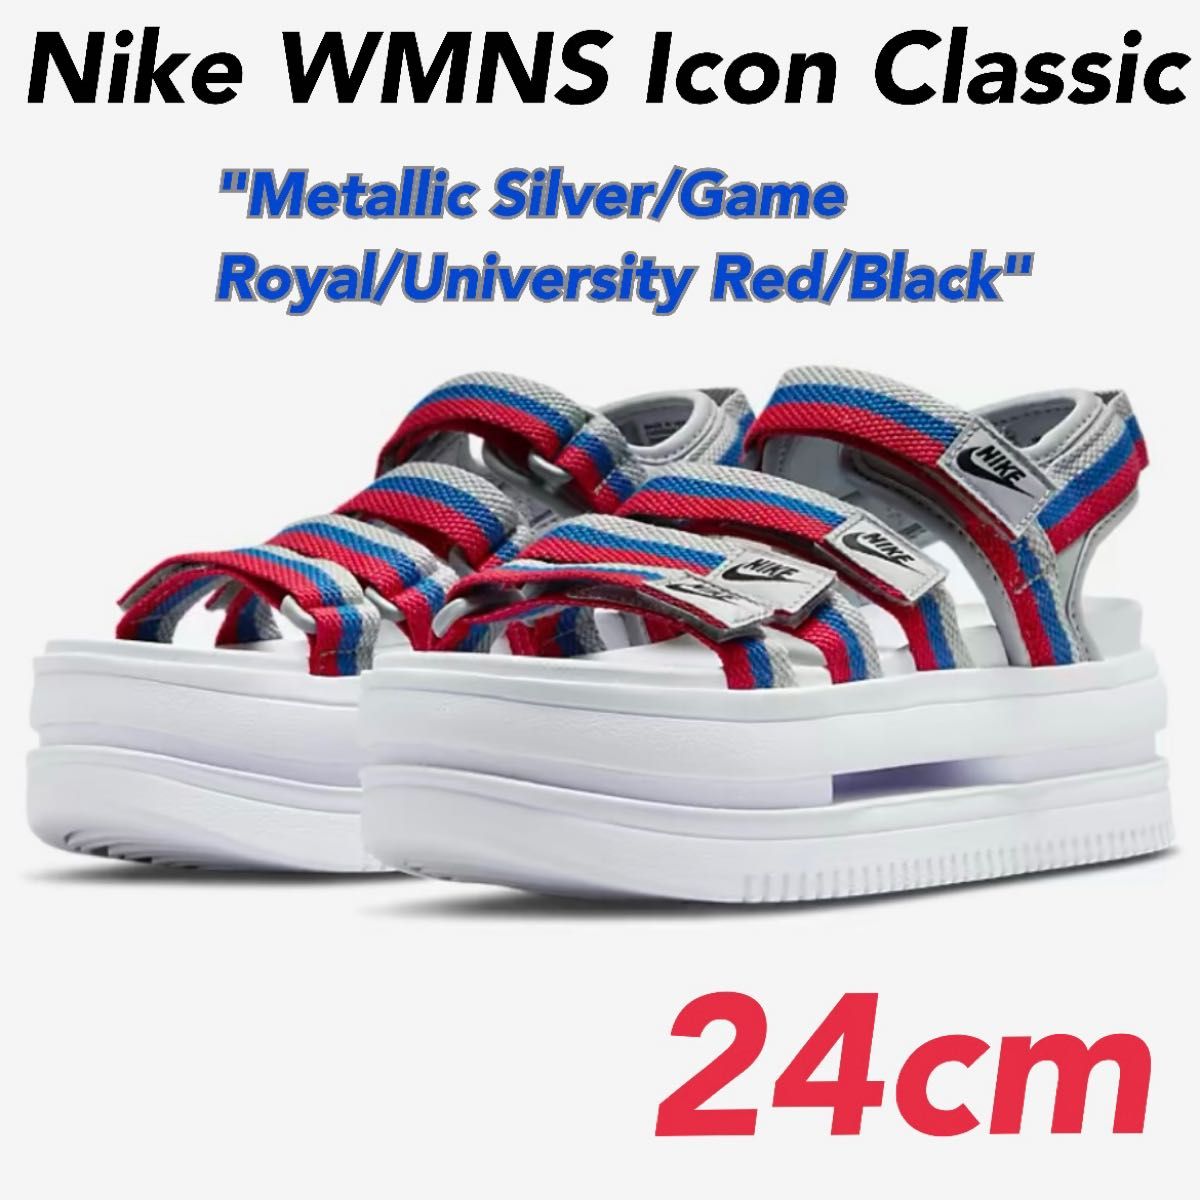 Nike WMNS Icon Classic Metallic Silver/Game Royal/University Red